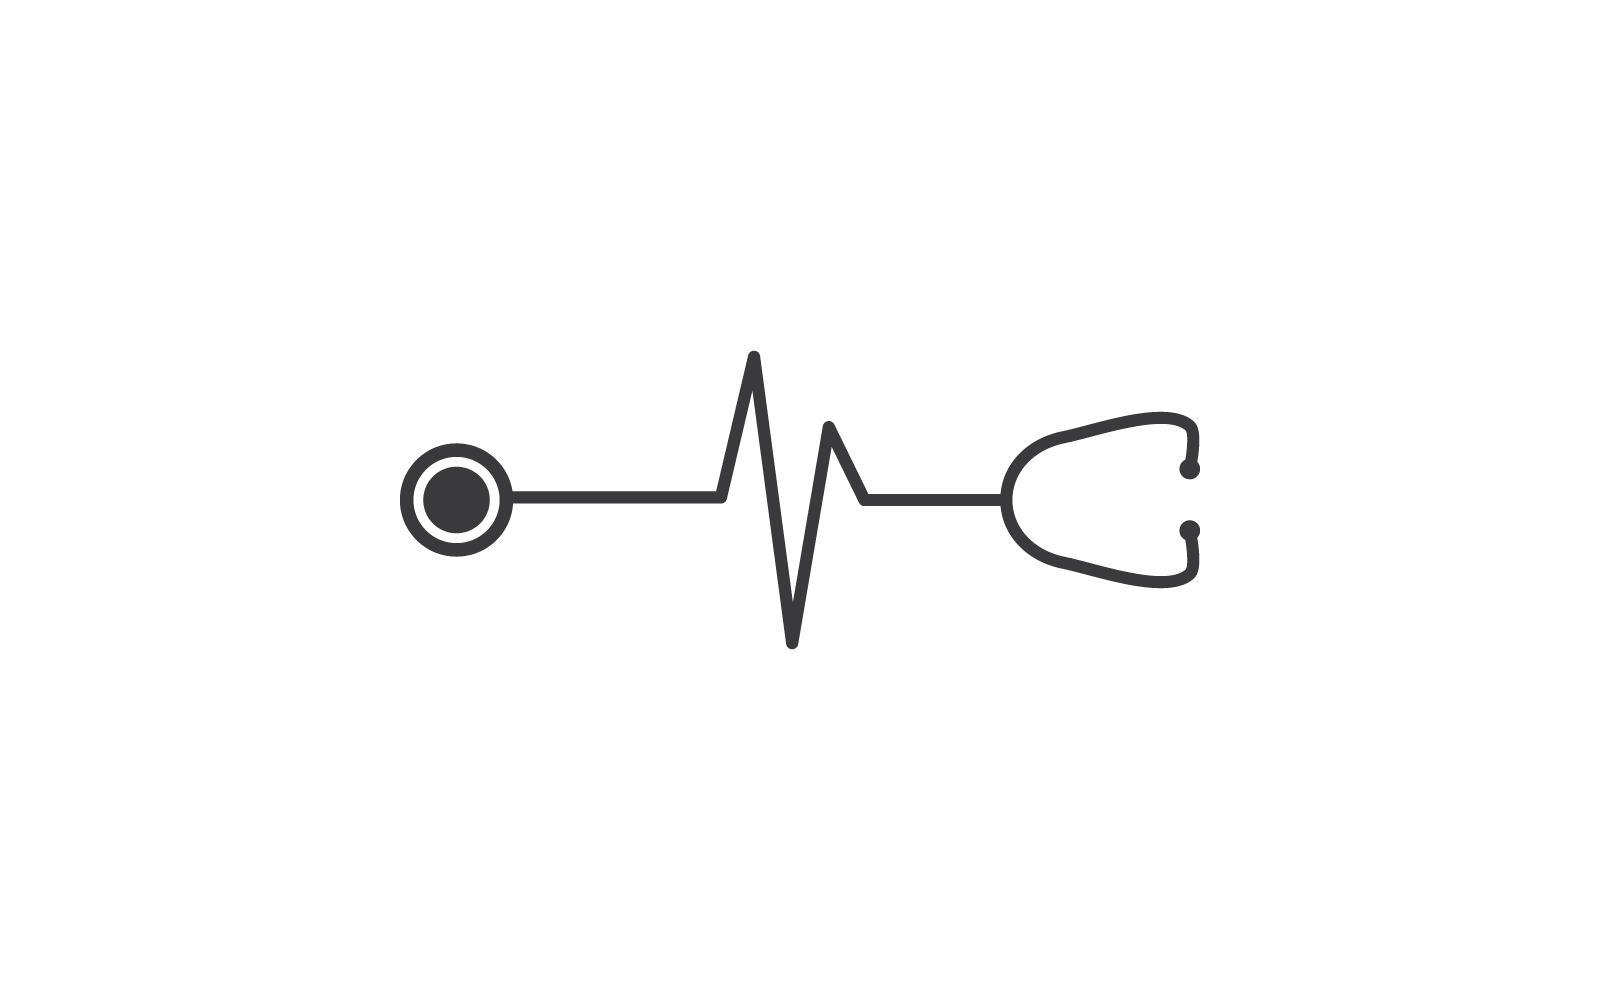 Stetoscope logo vector flat design template